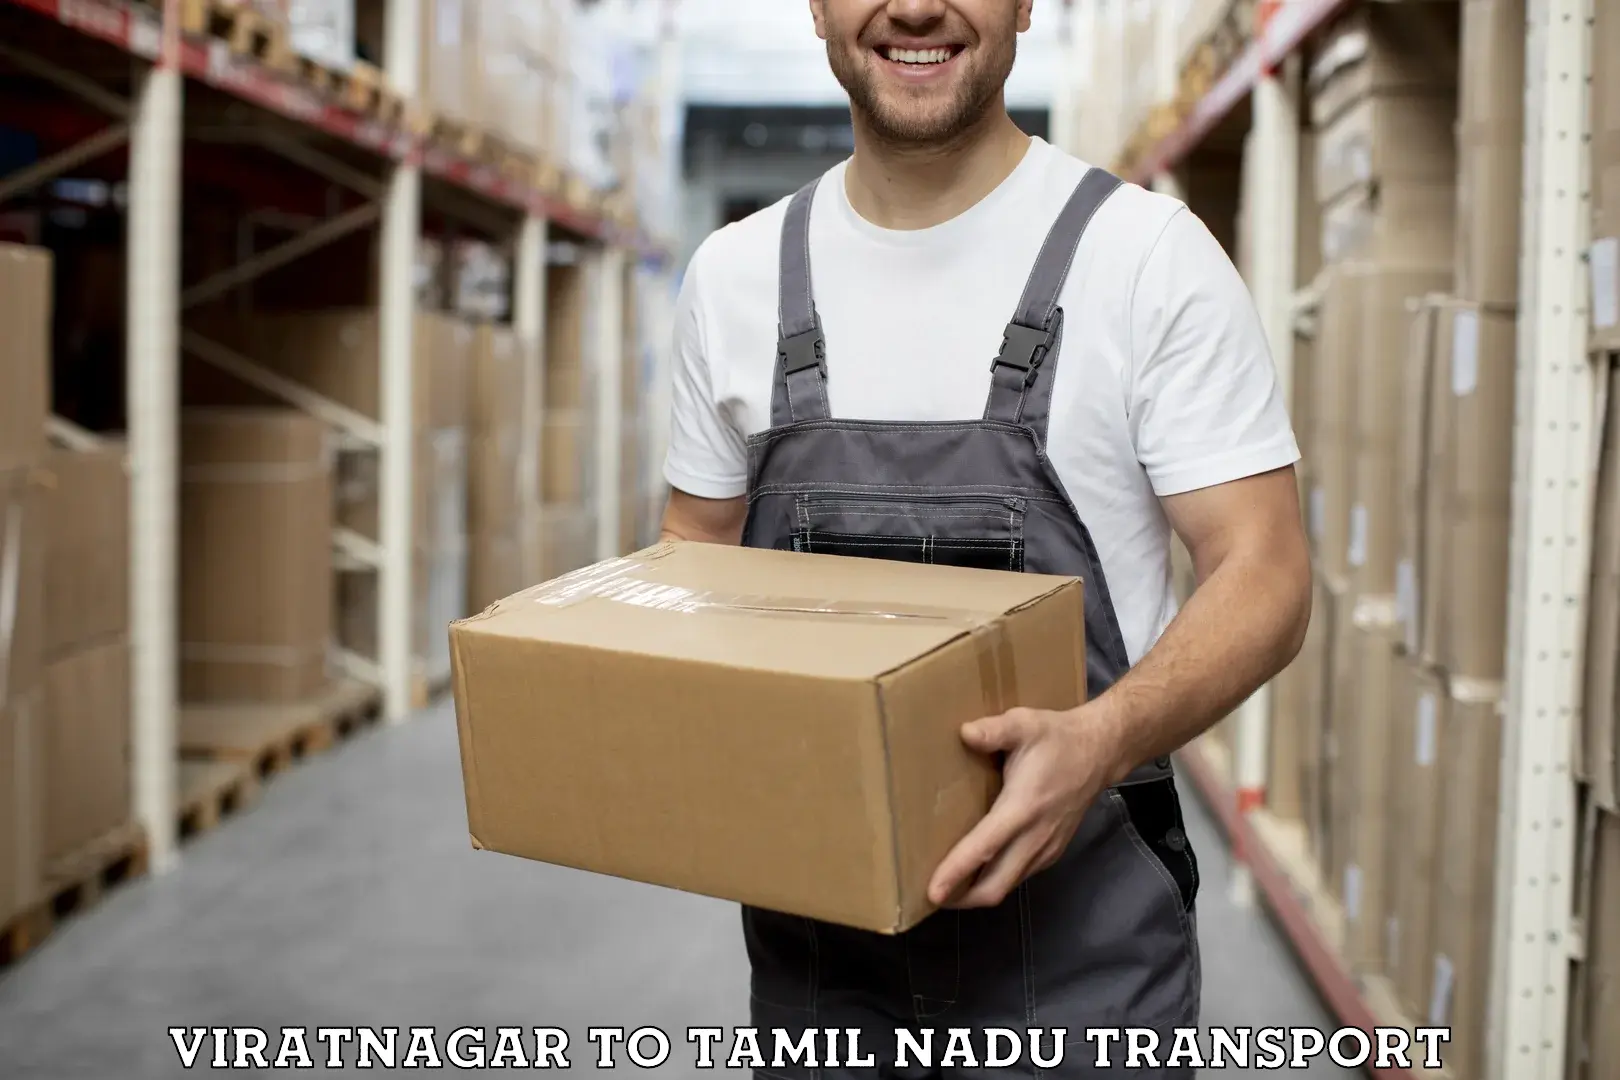 Delivery service Viratnagar to Sivaganga